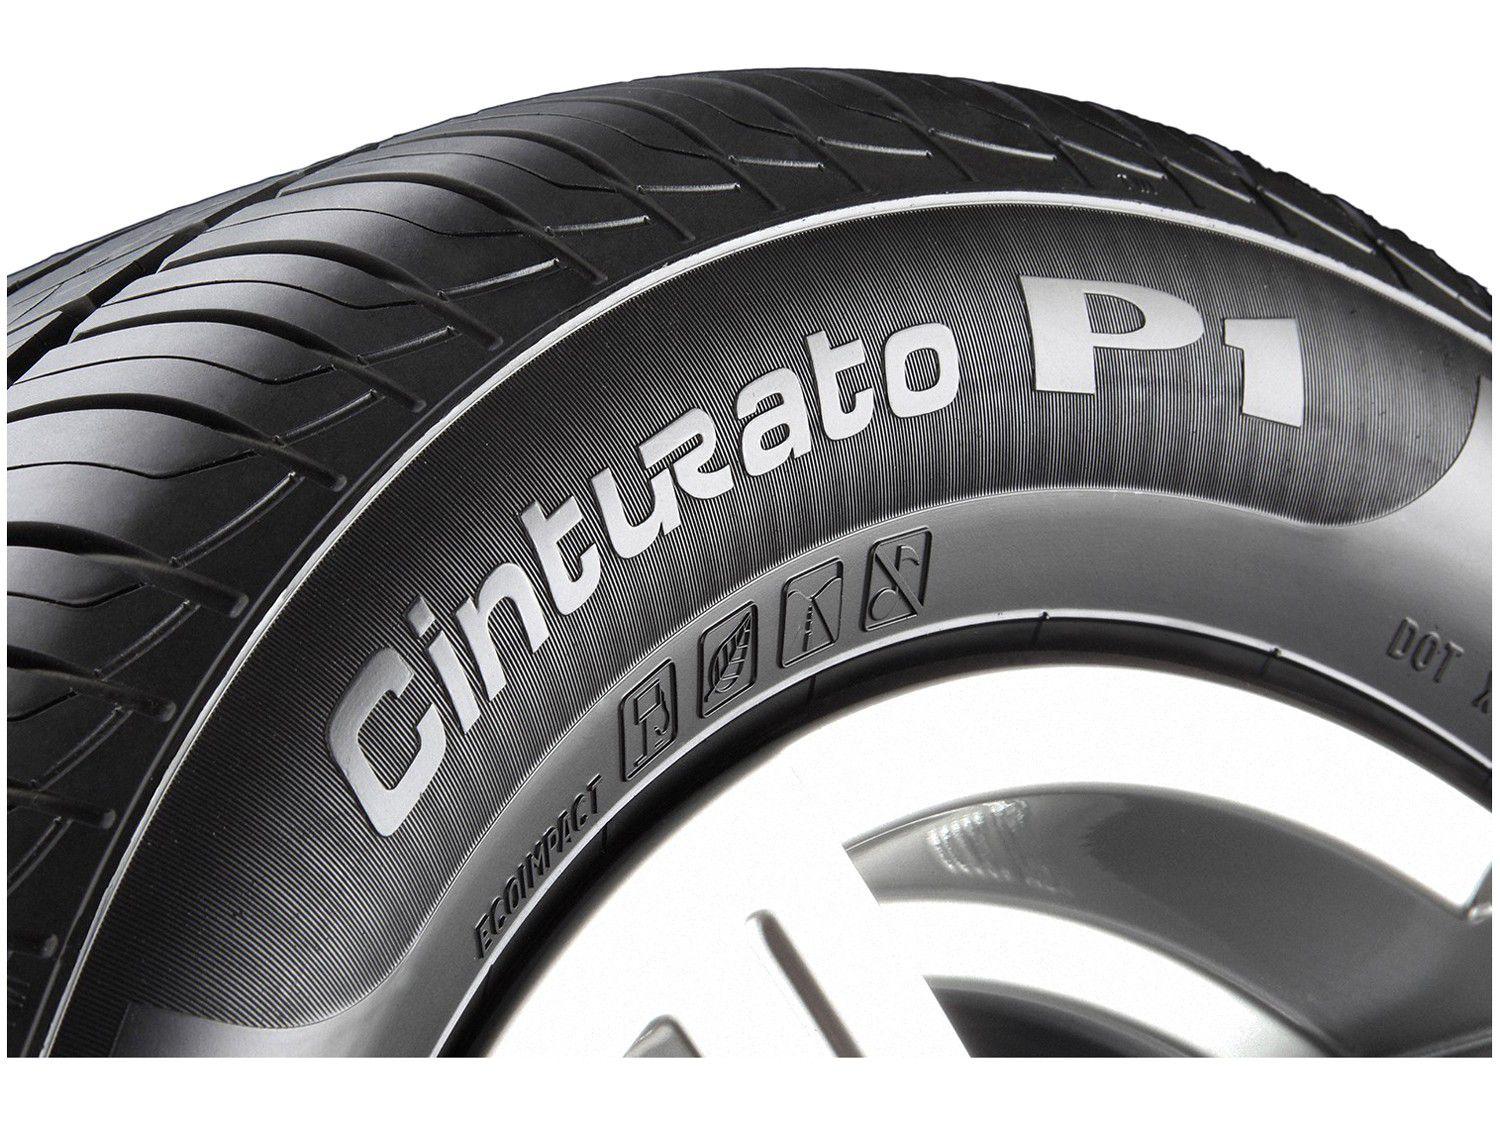 Пирелли центурато п 1. Pirelli 185/65r15 92h XL Cinturato p1 Verde TL. Pirelli Cinturato p1 давление в шинах. Pirelli Cinturato p1 комплект.